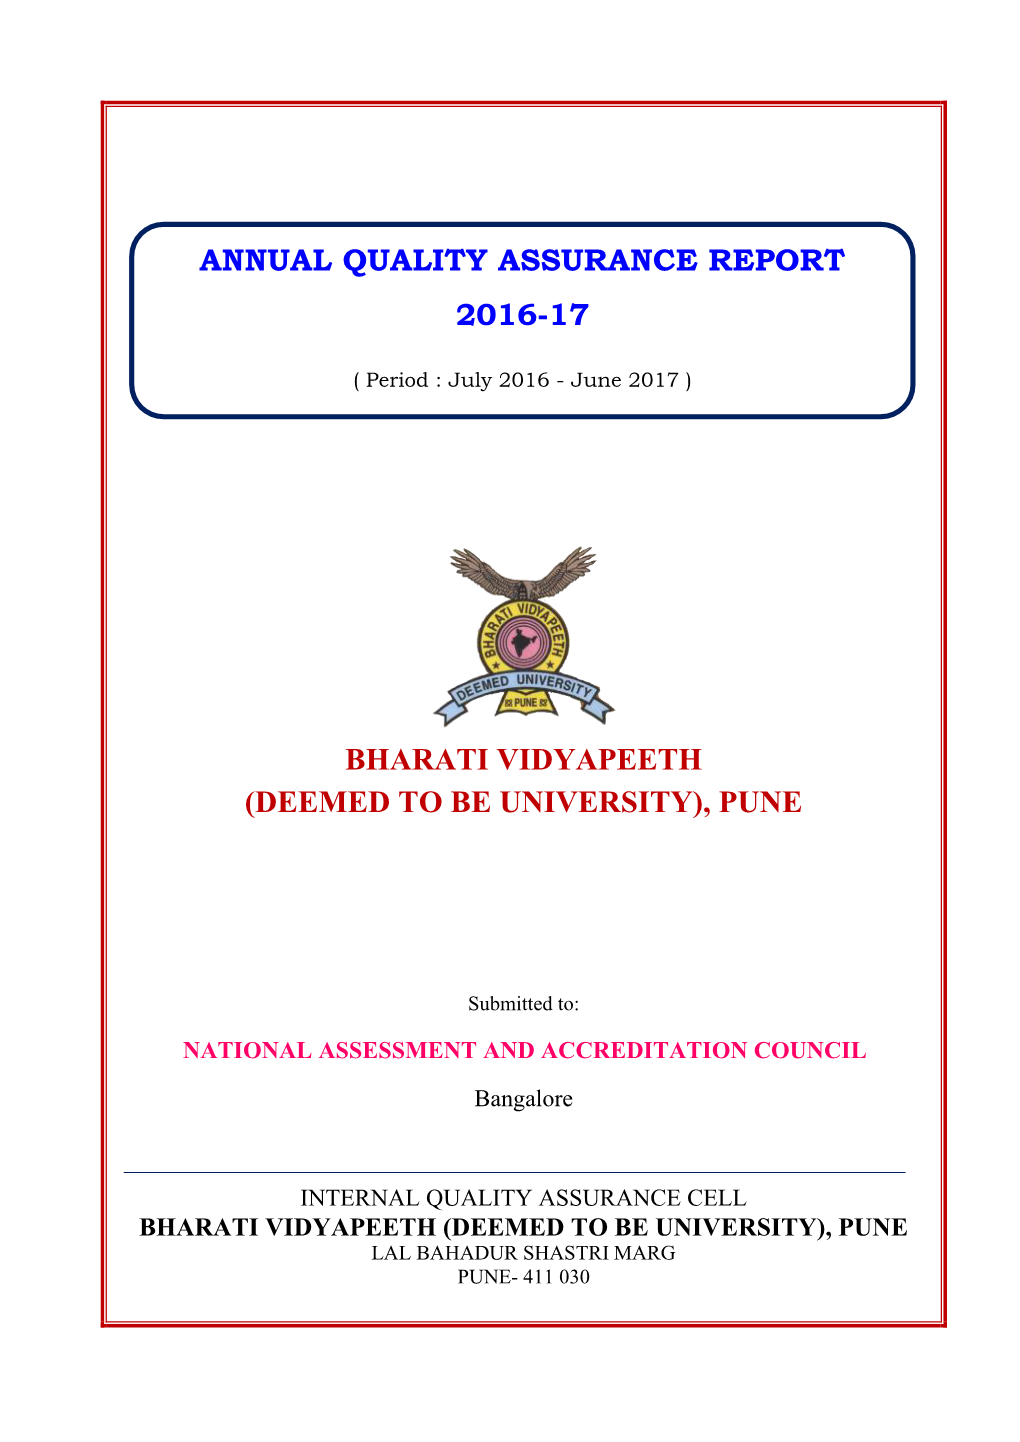 Bharati Vidyapeeth (Deemed to Be University), Pune Annual